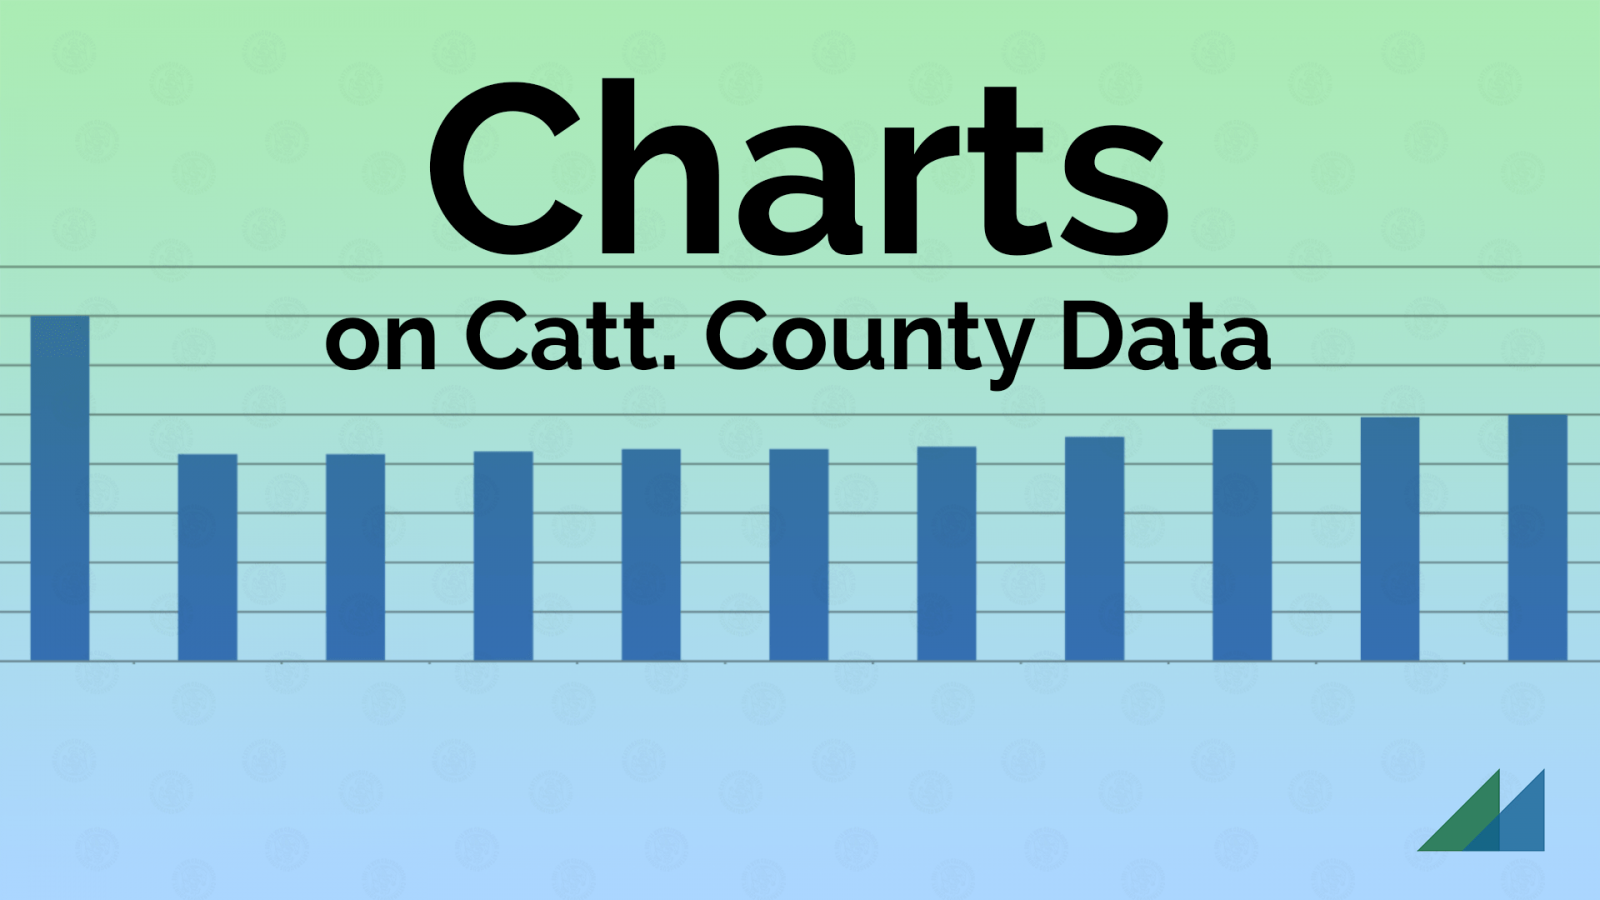 Charts on Catt. County Data